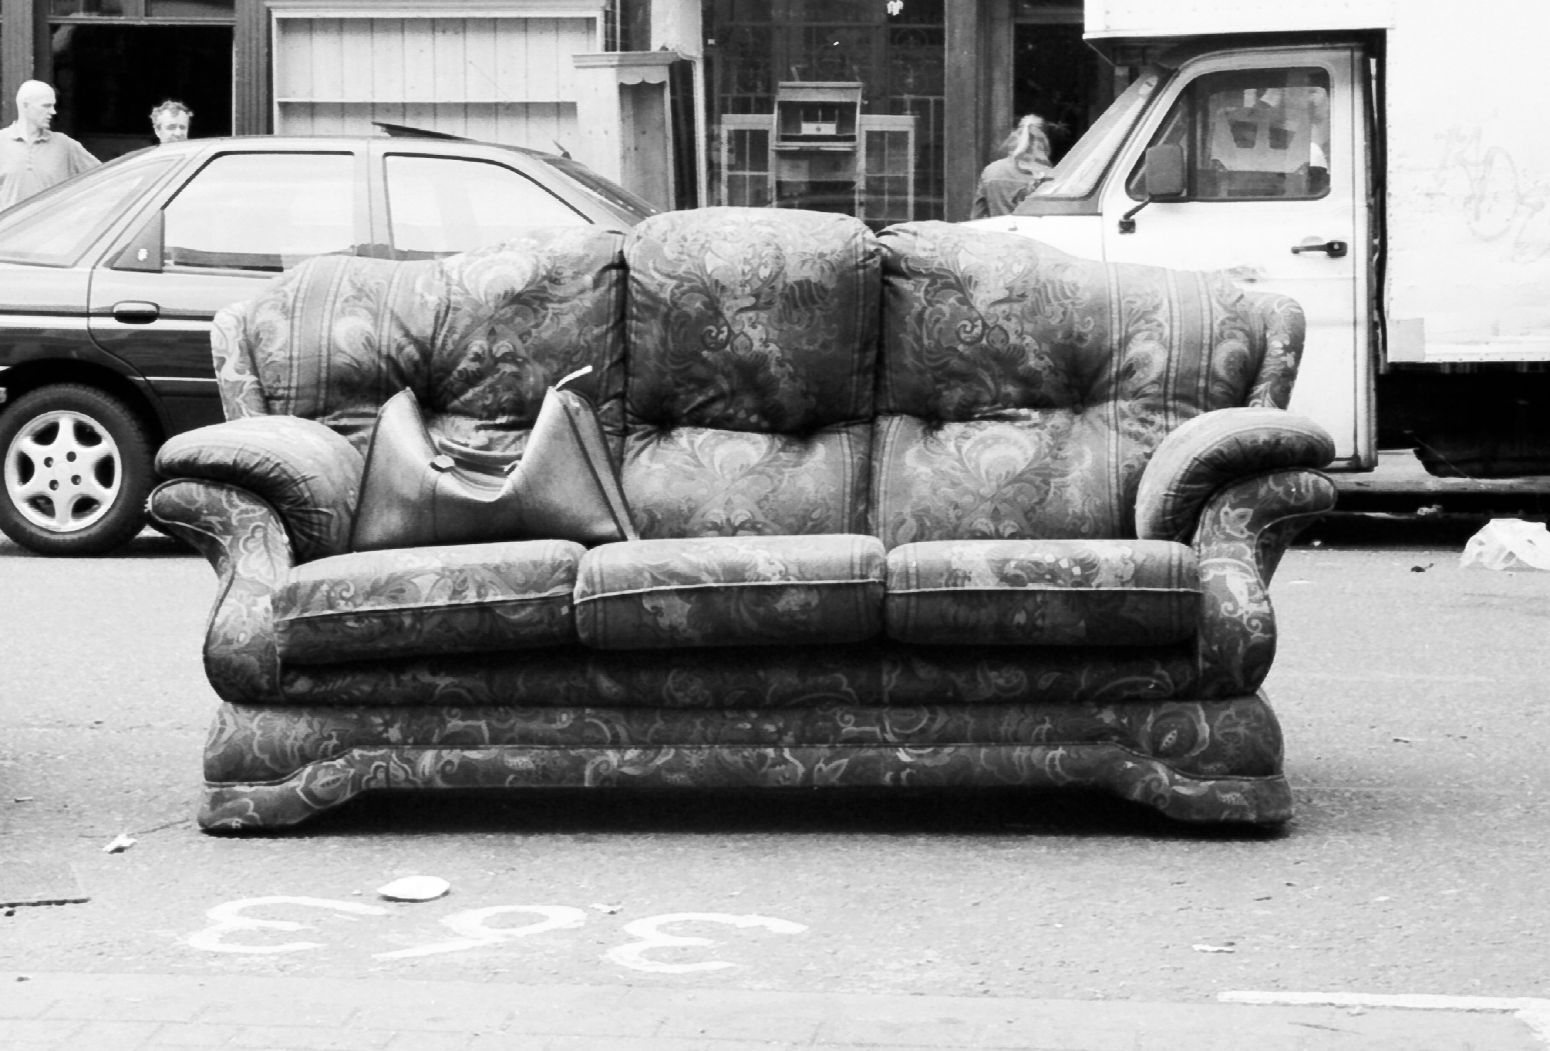 Couch. Portobello Market, London, England. April 2000